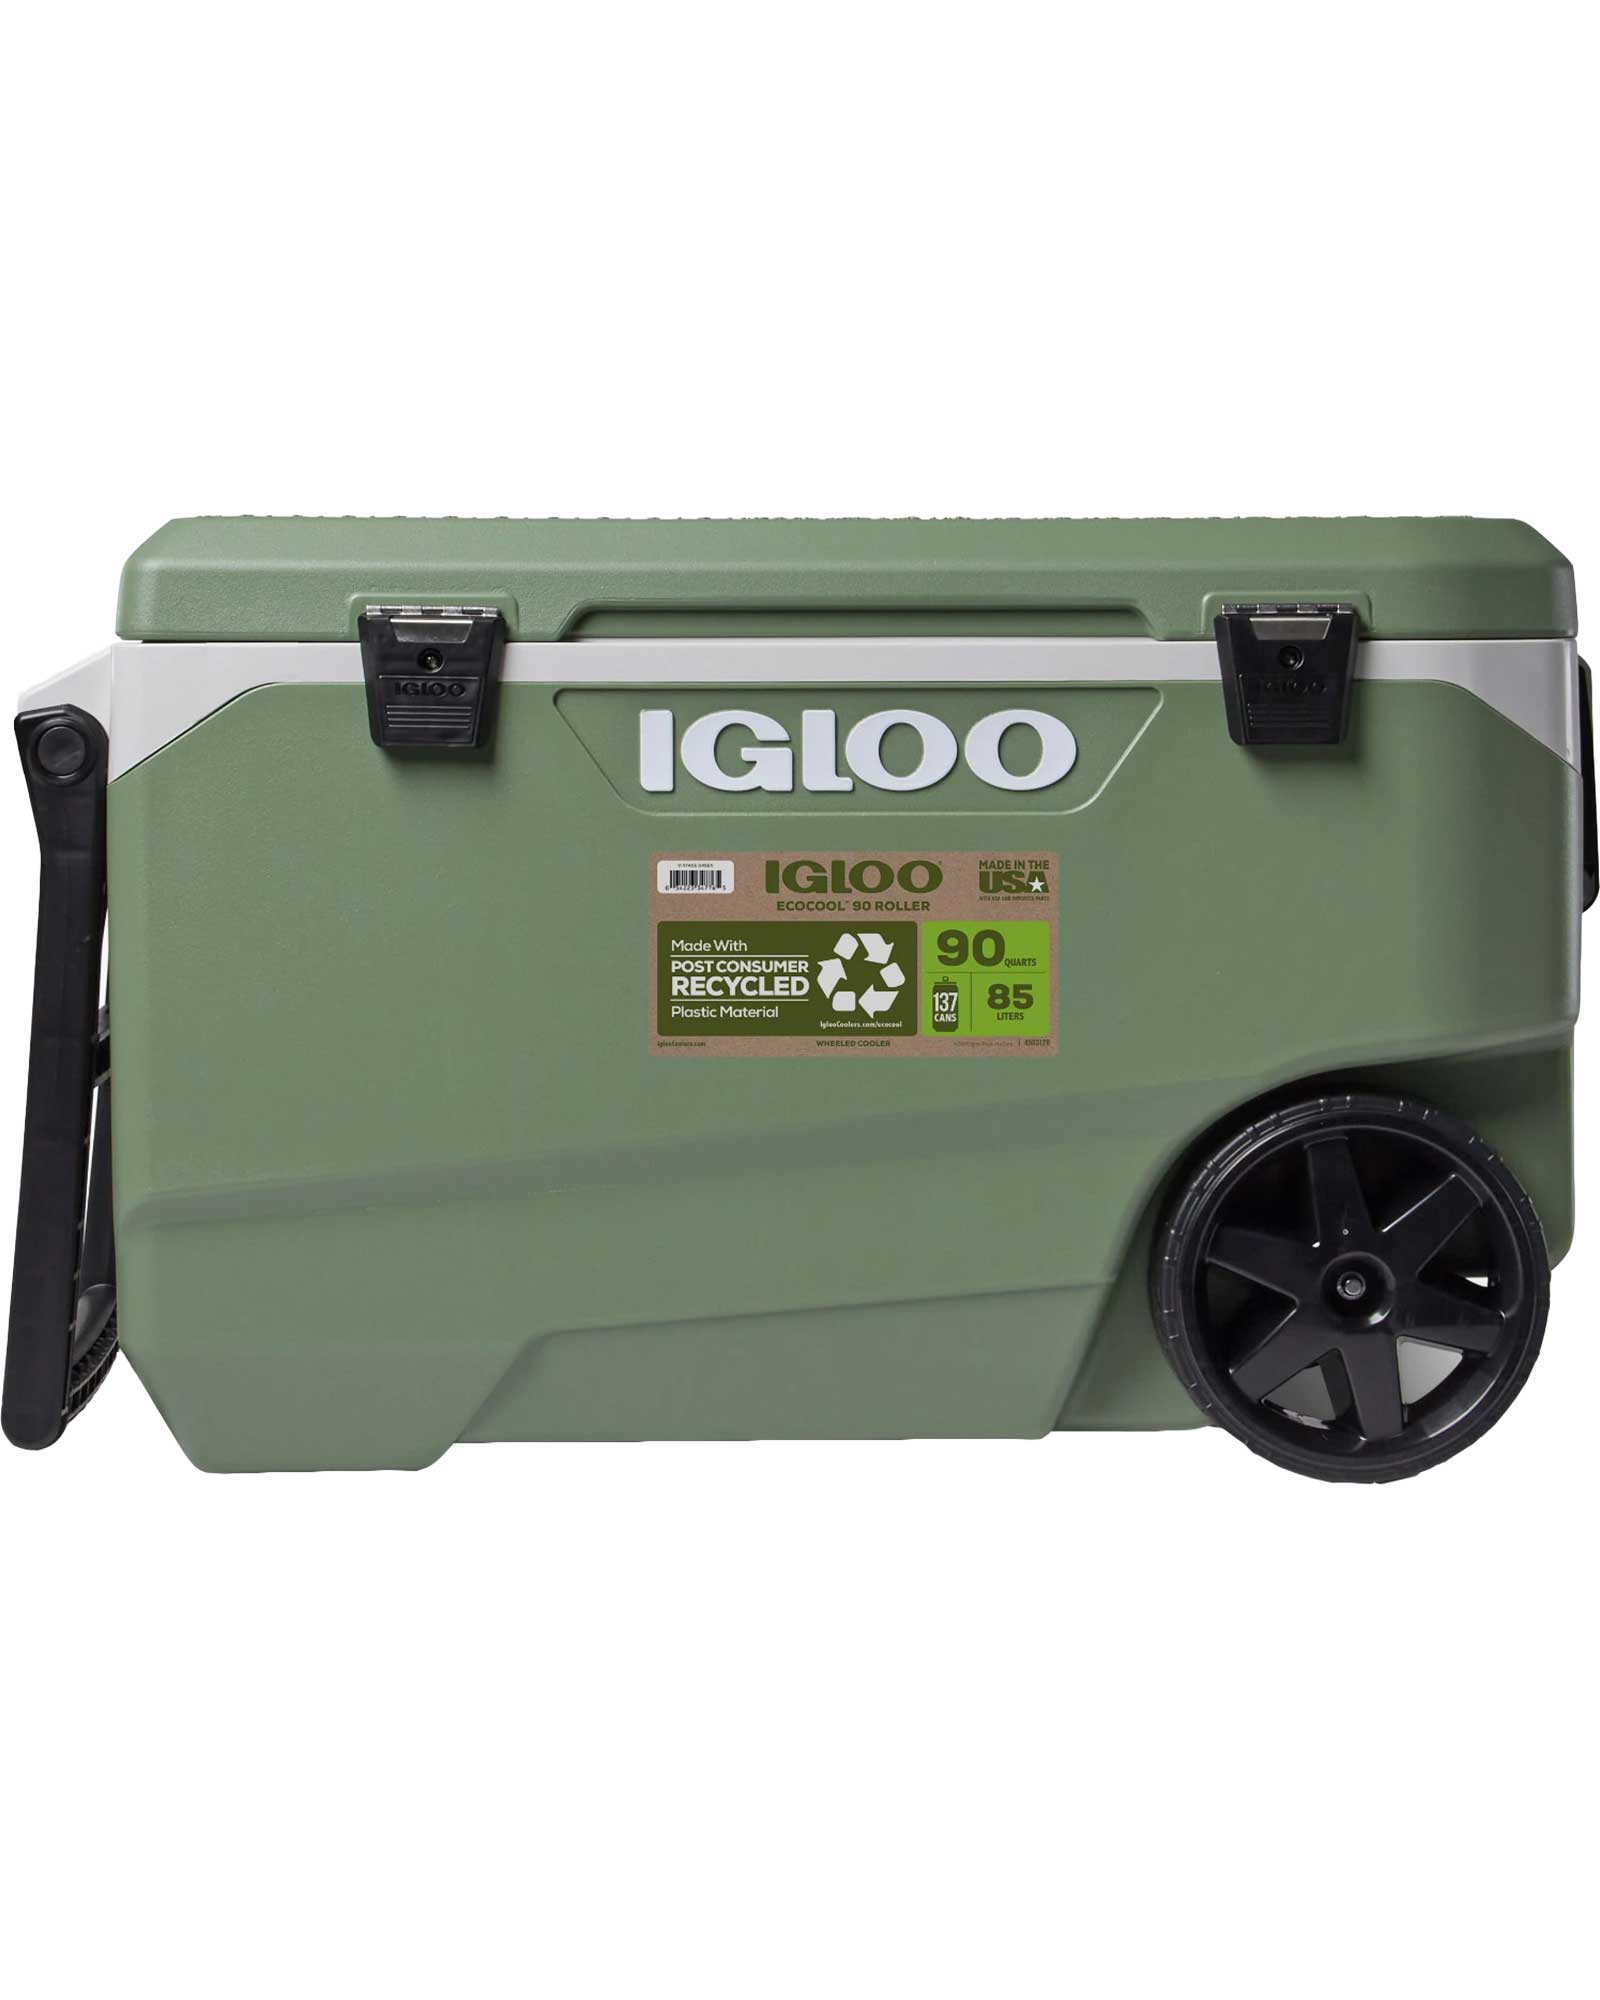 Igloo ECOCOOL Latitude 90 Qt Cooler - Vintage Green